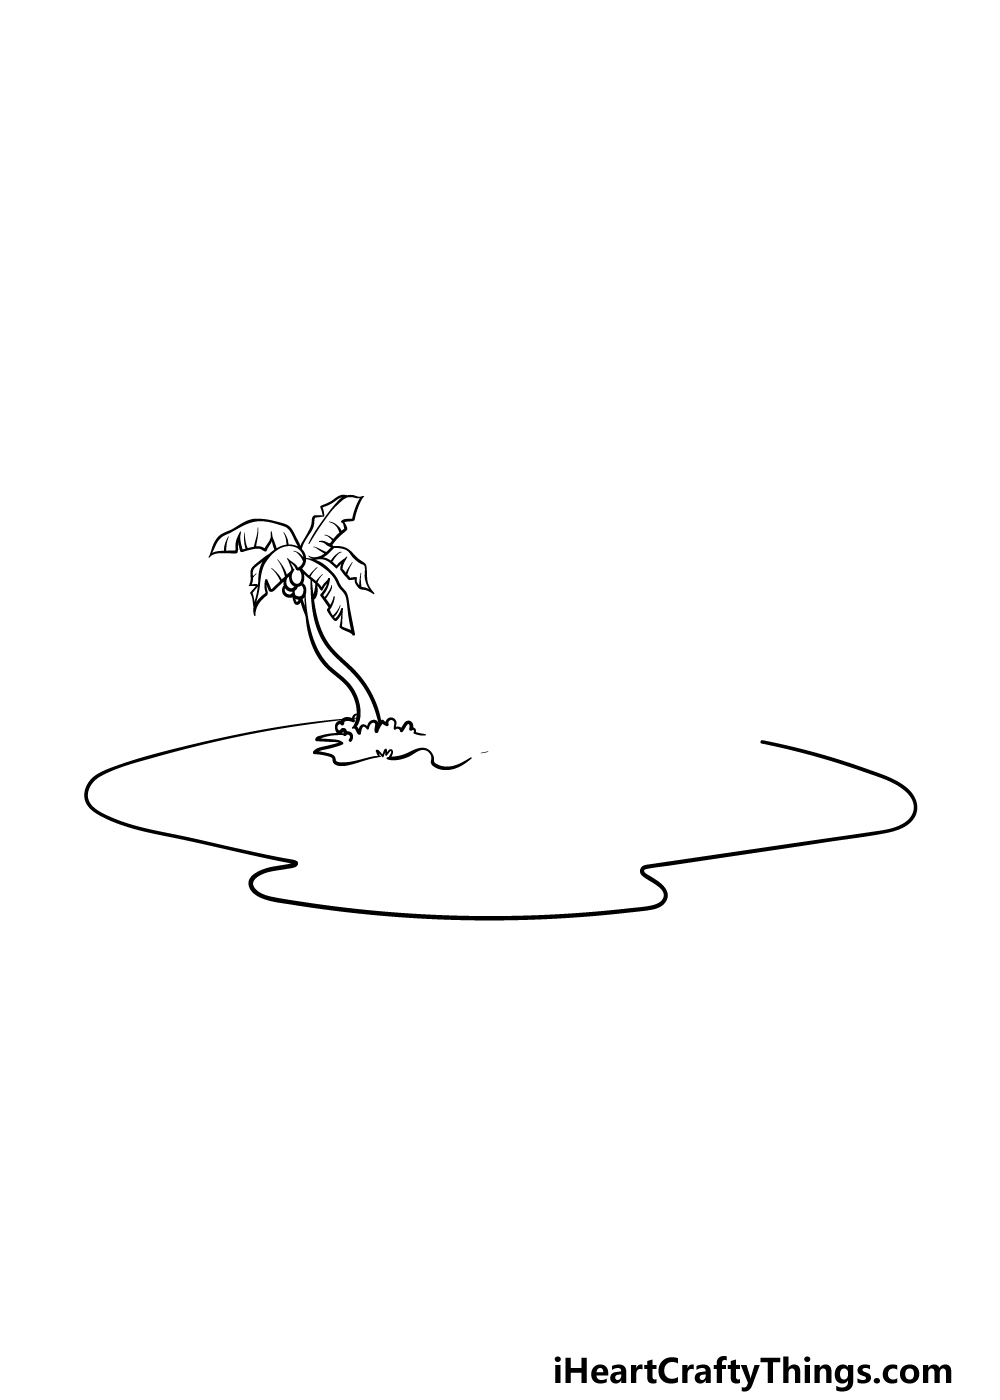 drawing an island step 2